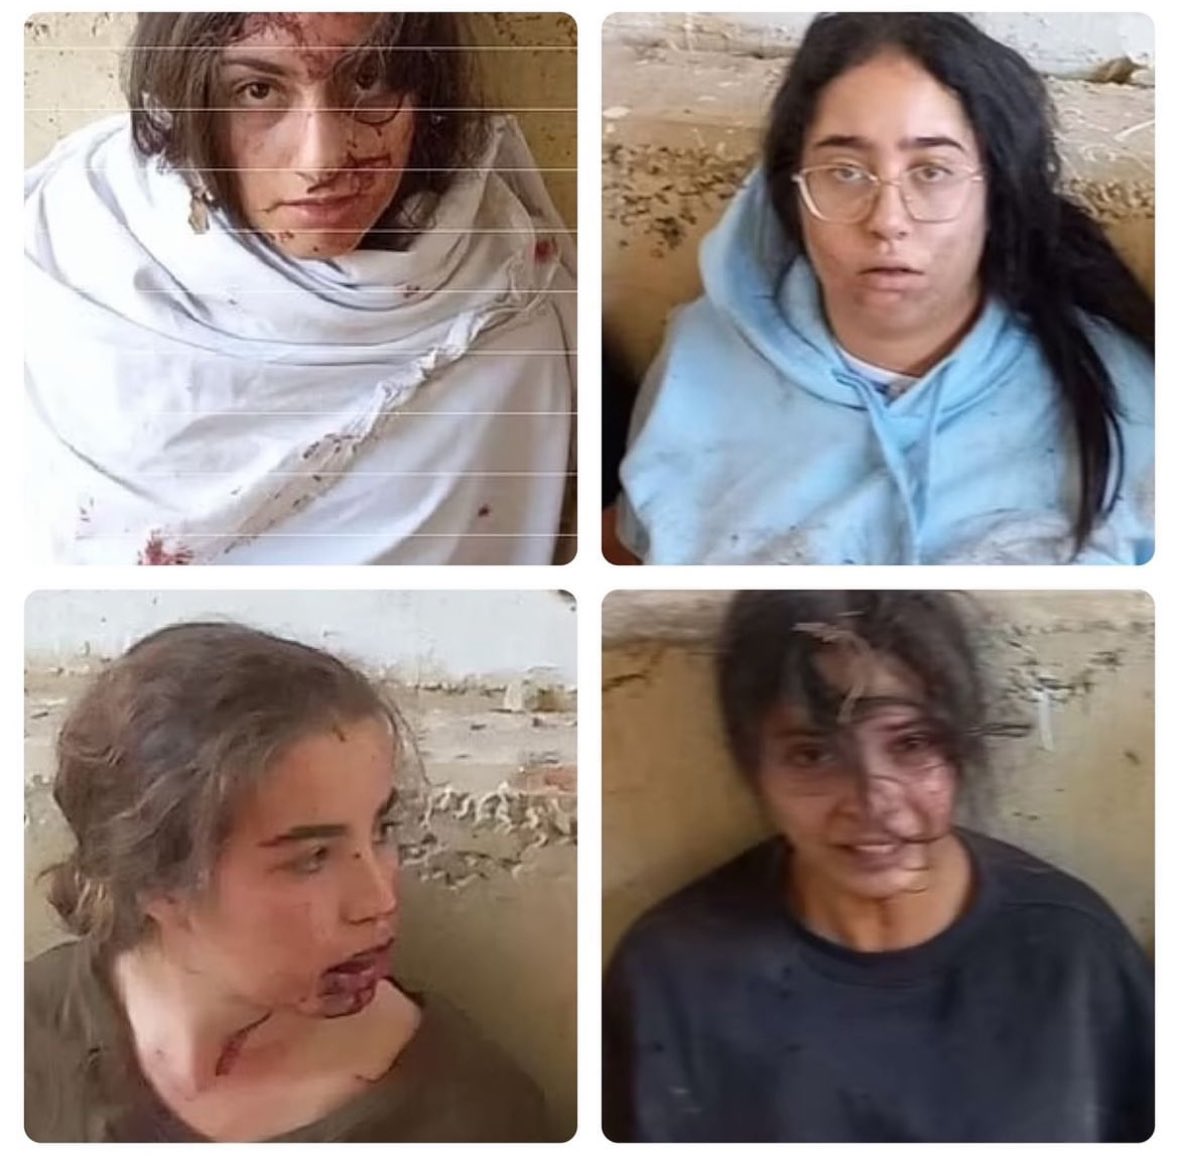 The faces of the Israeli women STILL in Hamas captivity.

#BeTheirVoice